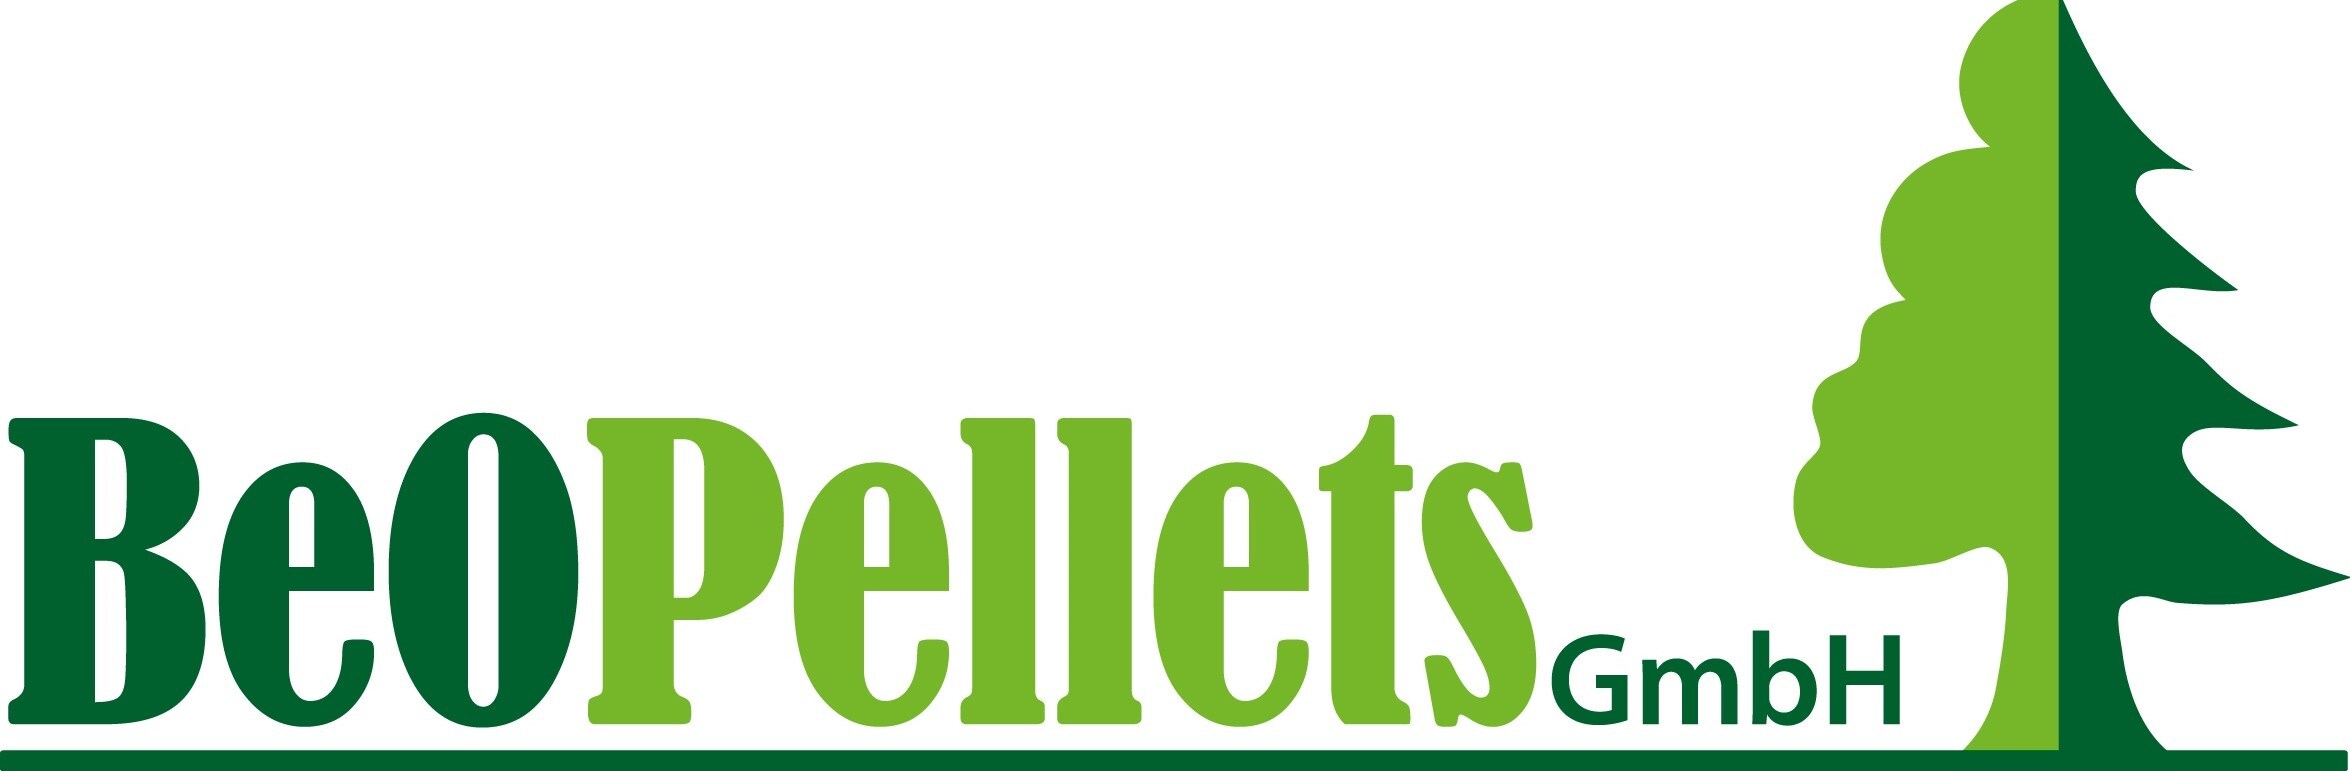 BeOPellets GmbH Logo